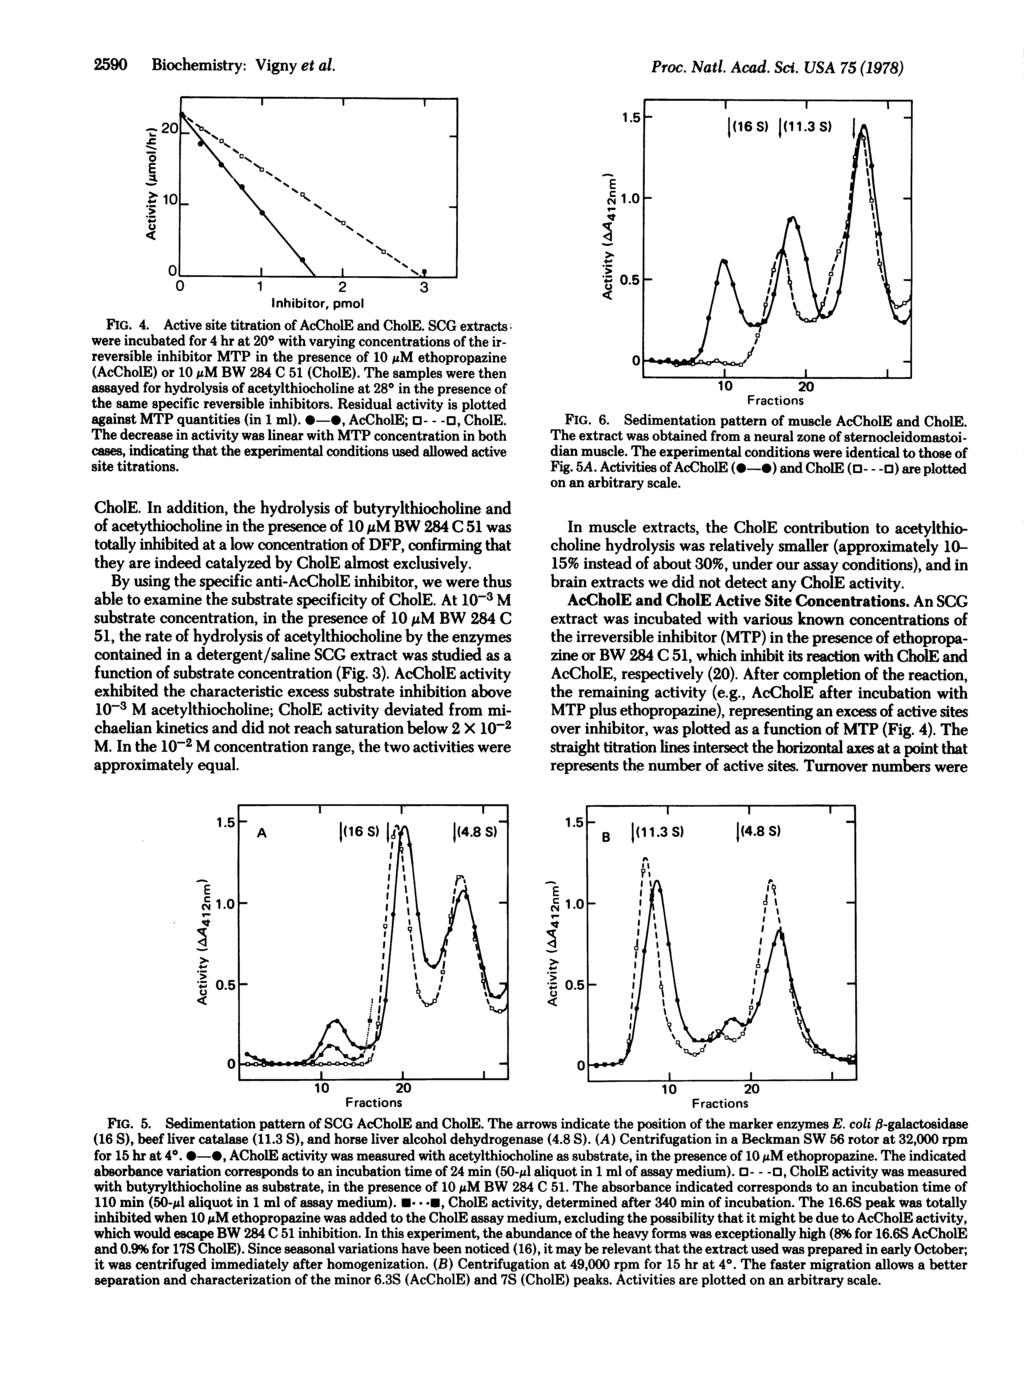 -2-590 0 r. Biochemistry: Vigny et al. Proc. Nati. Acad. Sci. USA 75 (1978) C041.0 o 0 1 2 3 nhibitor, pmol FG. 4. Active site titration of AcChol and Chol.